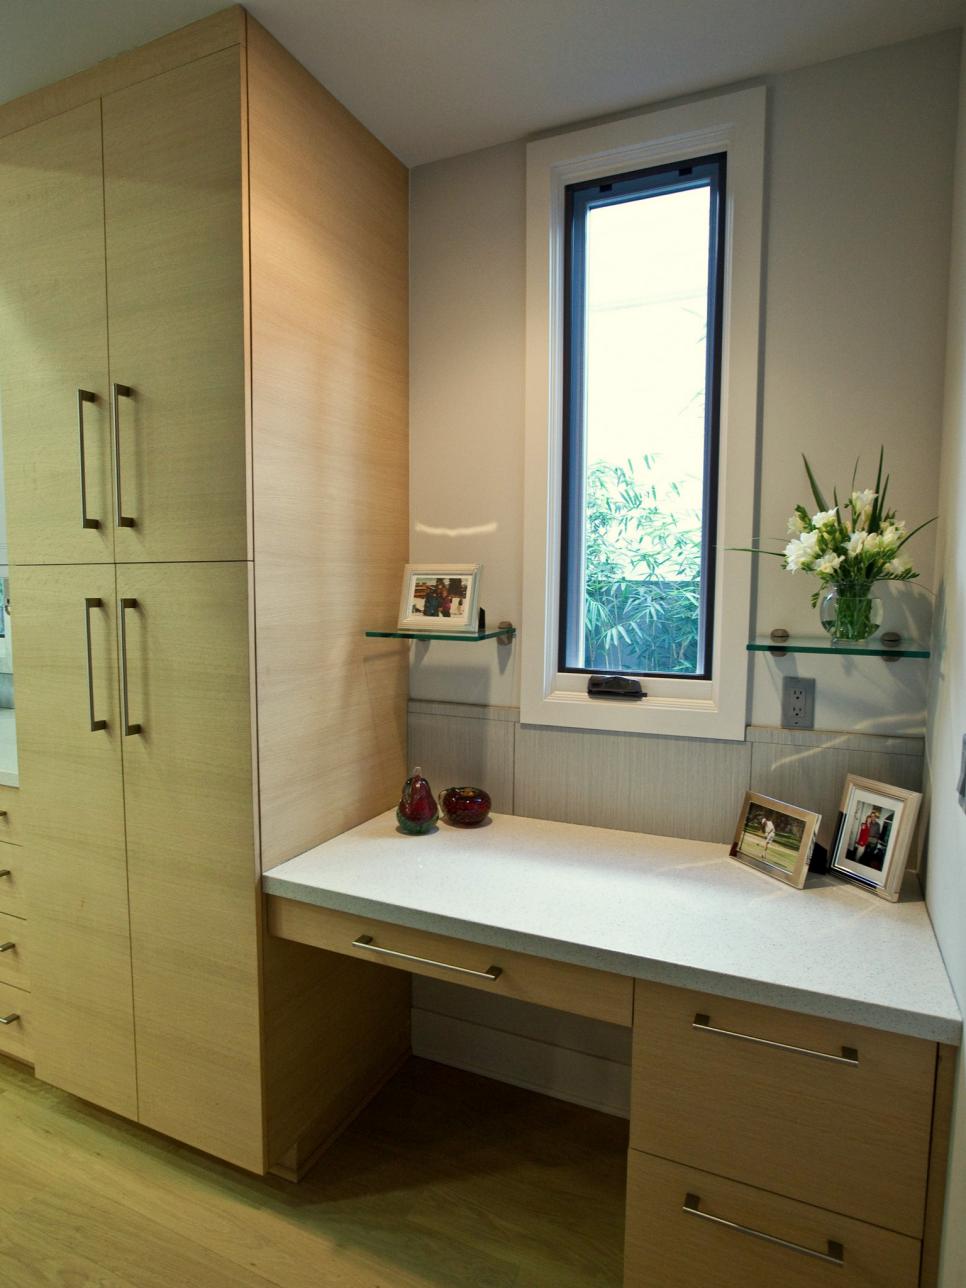 Sleek Kitchen Desk With Quartz Countertops and Modern Cabinets